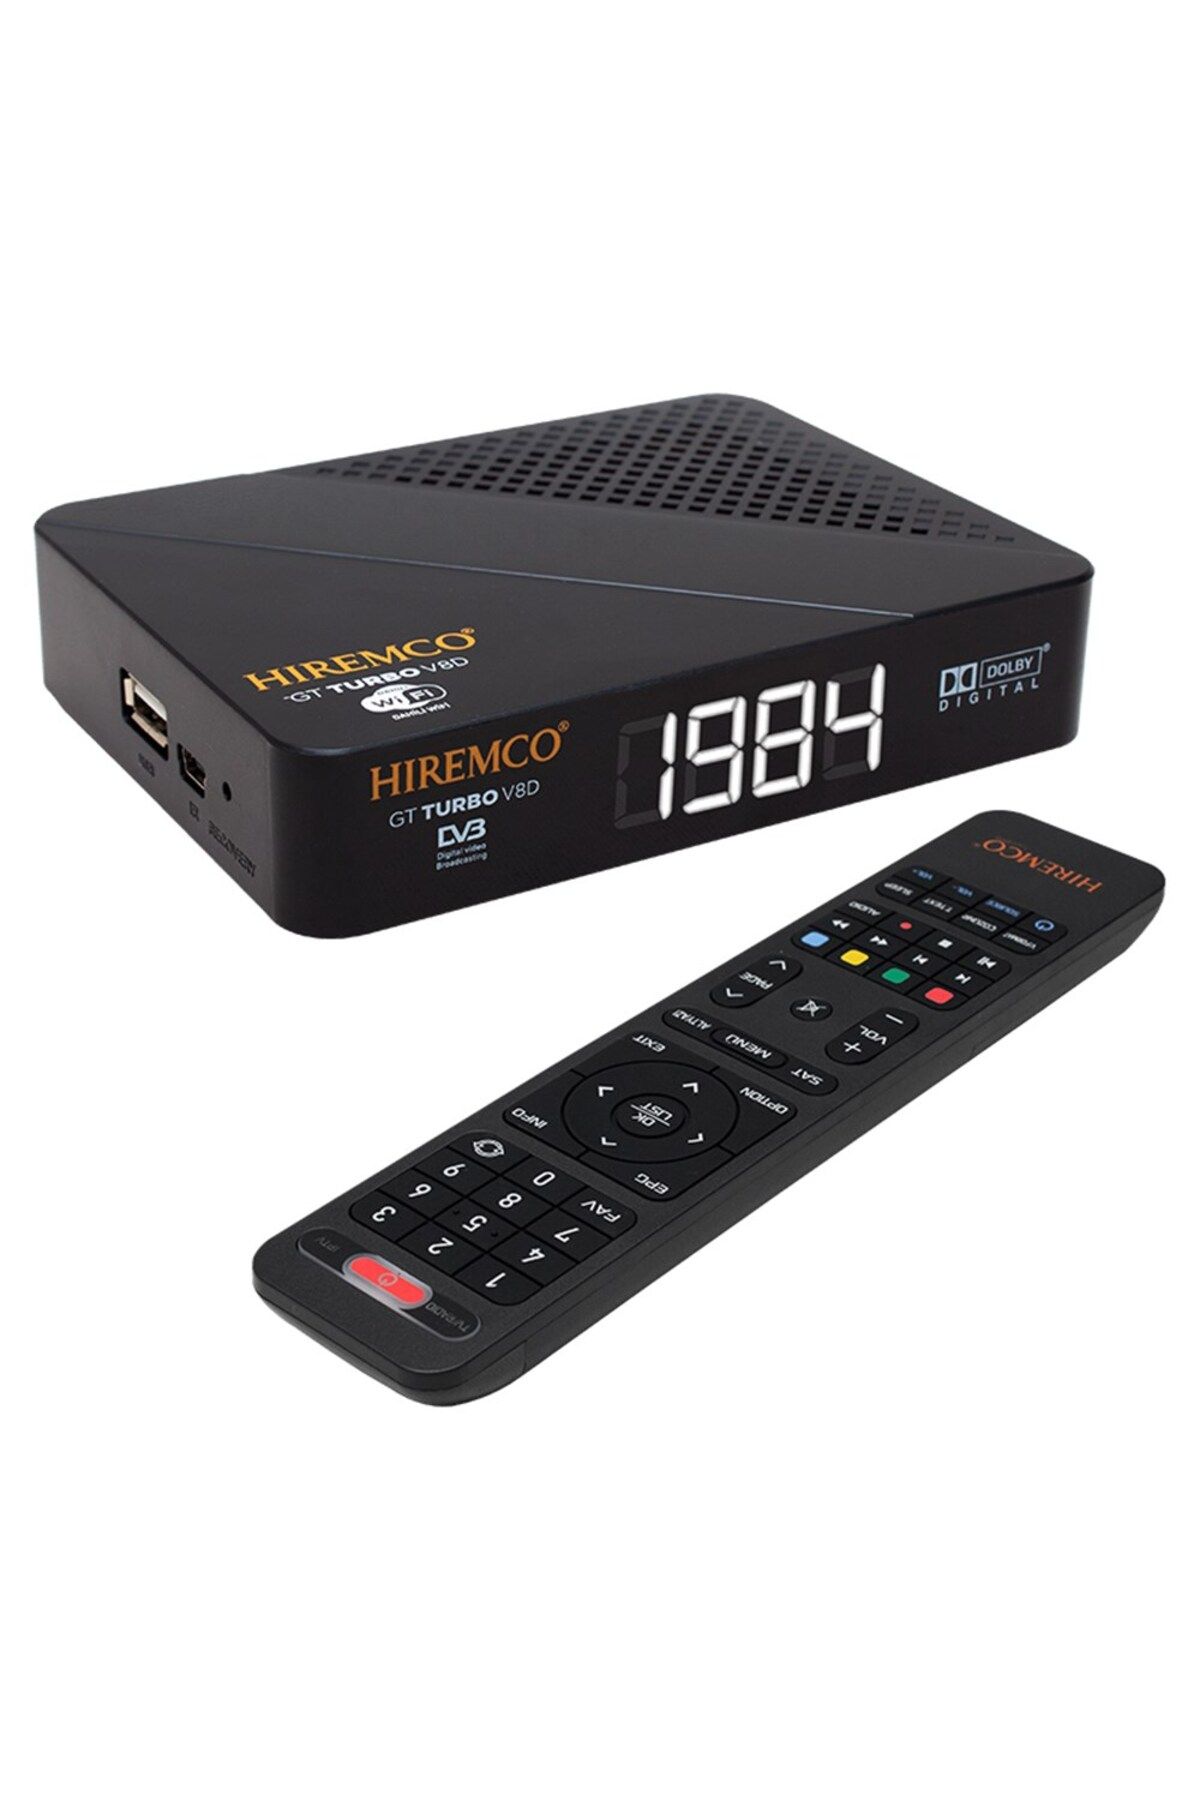 Hiremco Gt Turbo V8d+ Hd Ip Tv Plus Ethernetli Lınux Tabanlı Dahili Wifi Full Hd Mini Uydu Alıcısı